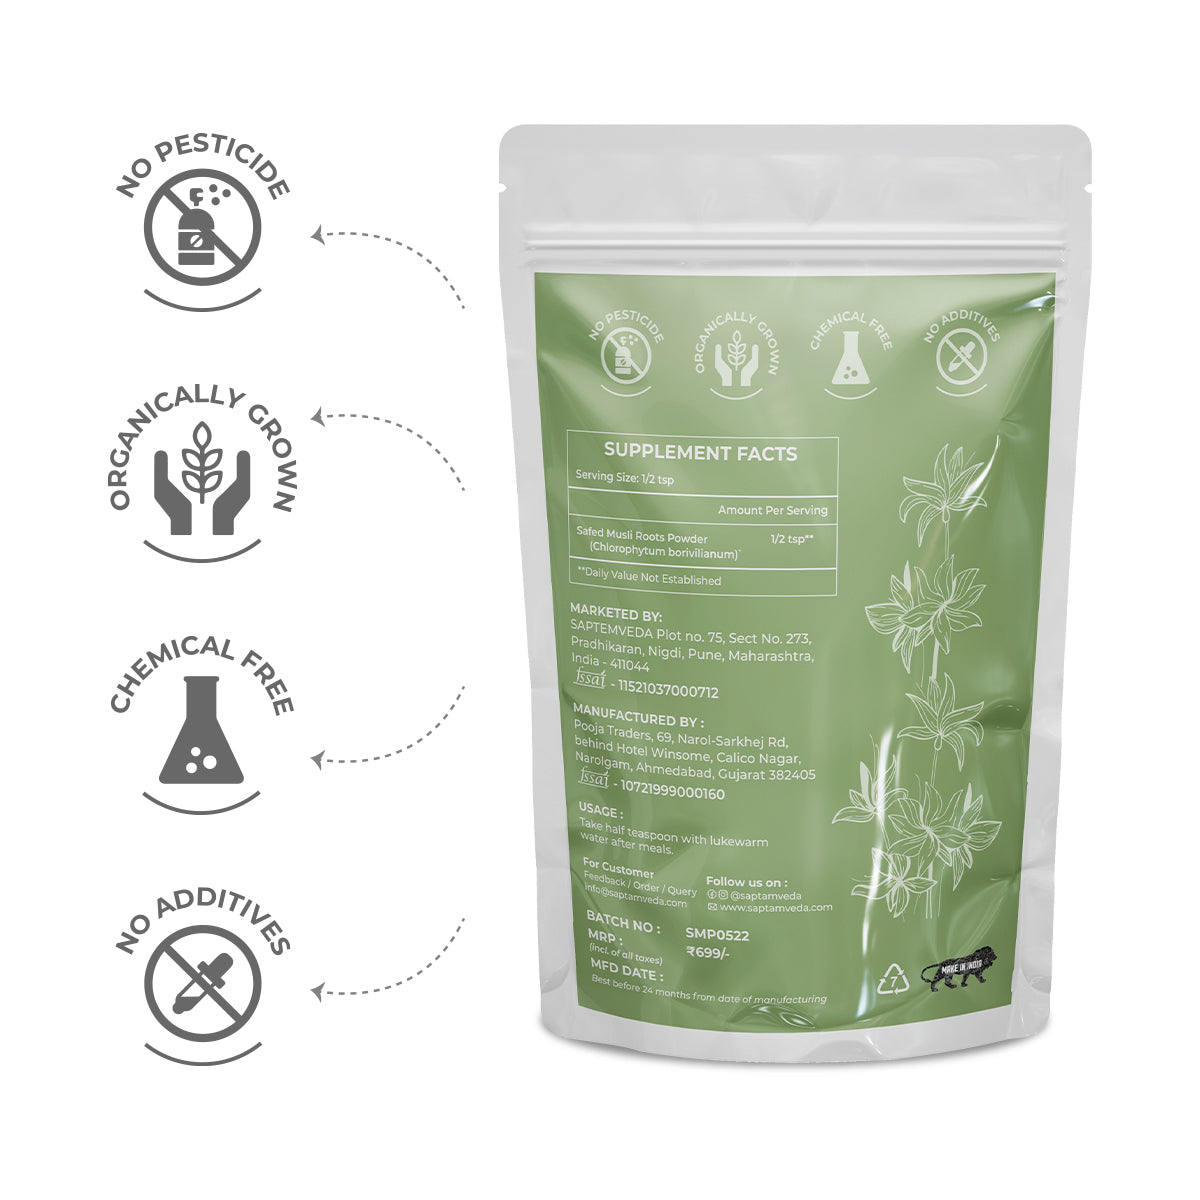 Buy Premium Safed Musli Powder | Natural & Pure (150gms)